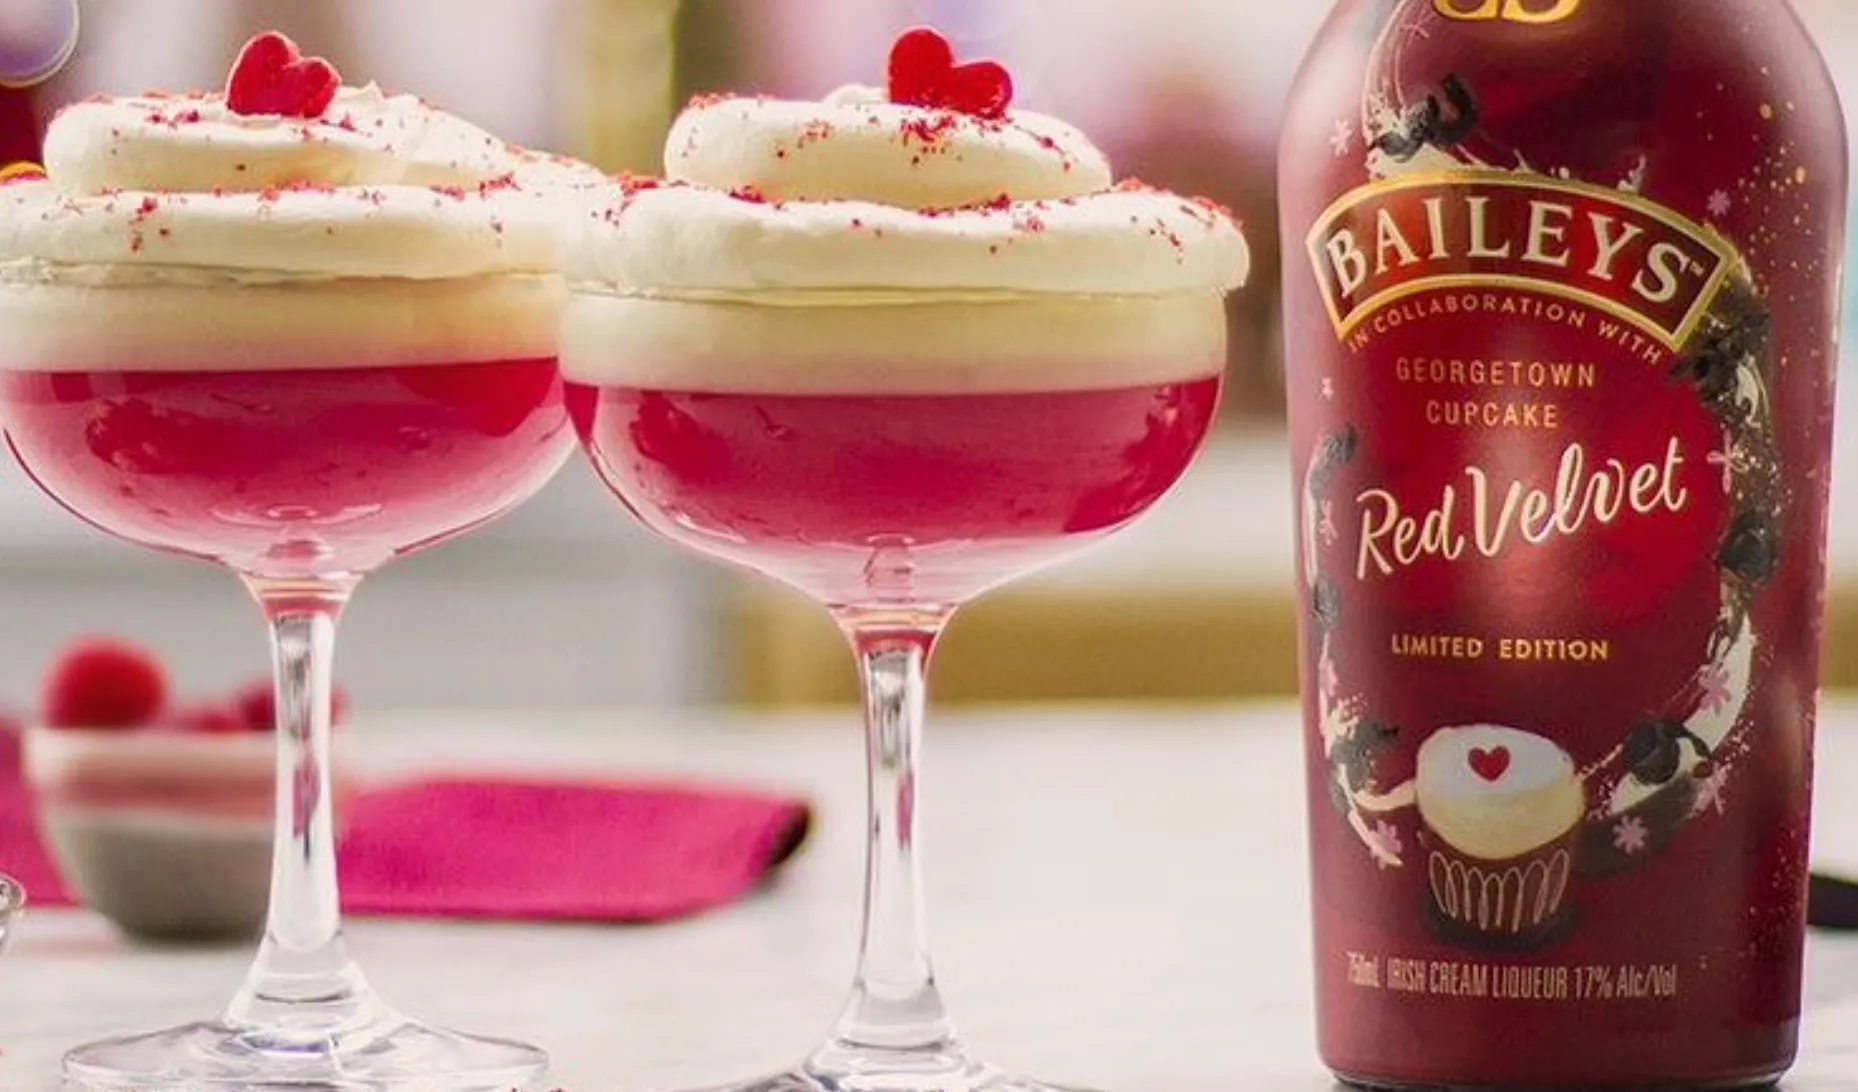 baileys komt met limited edition red velvet cupcake